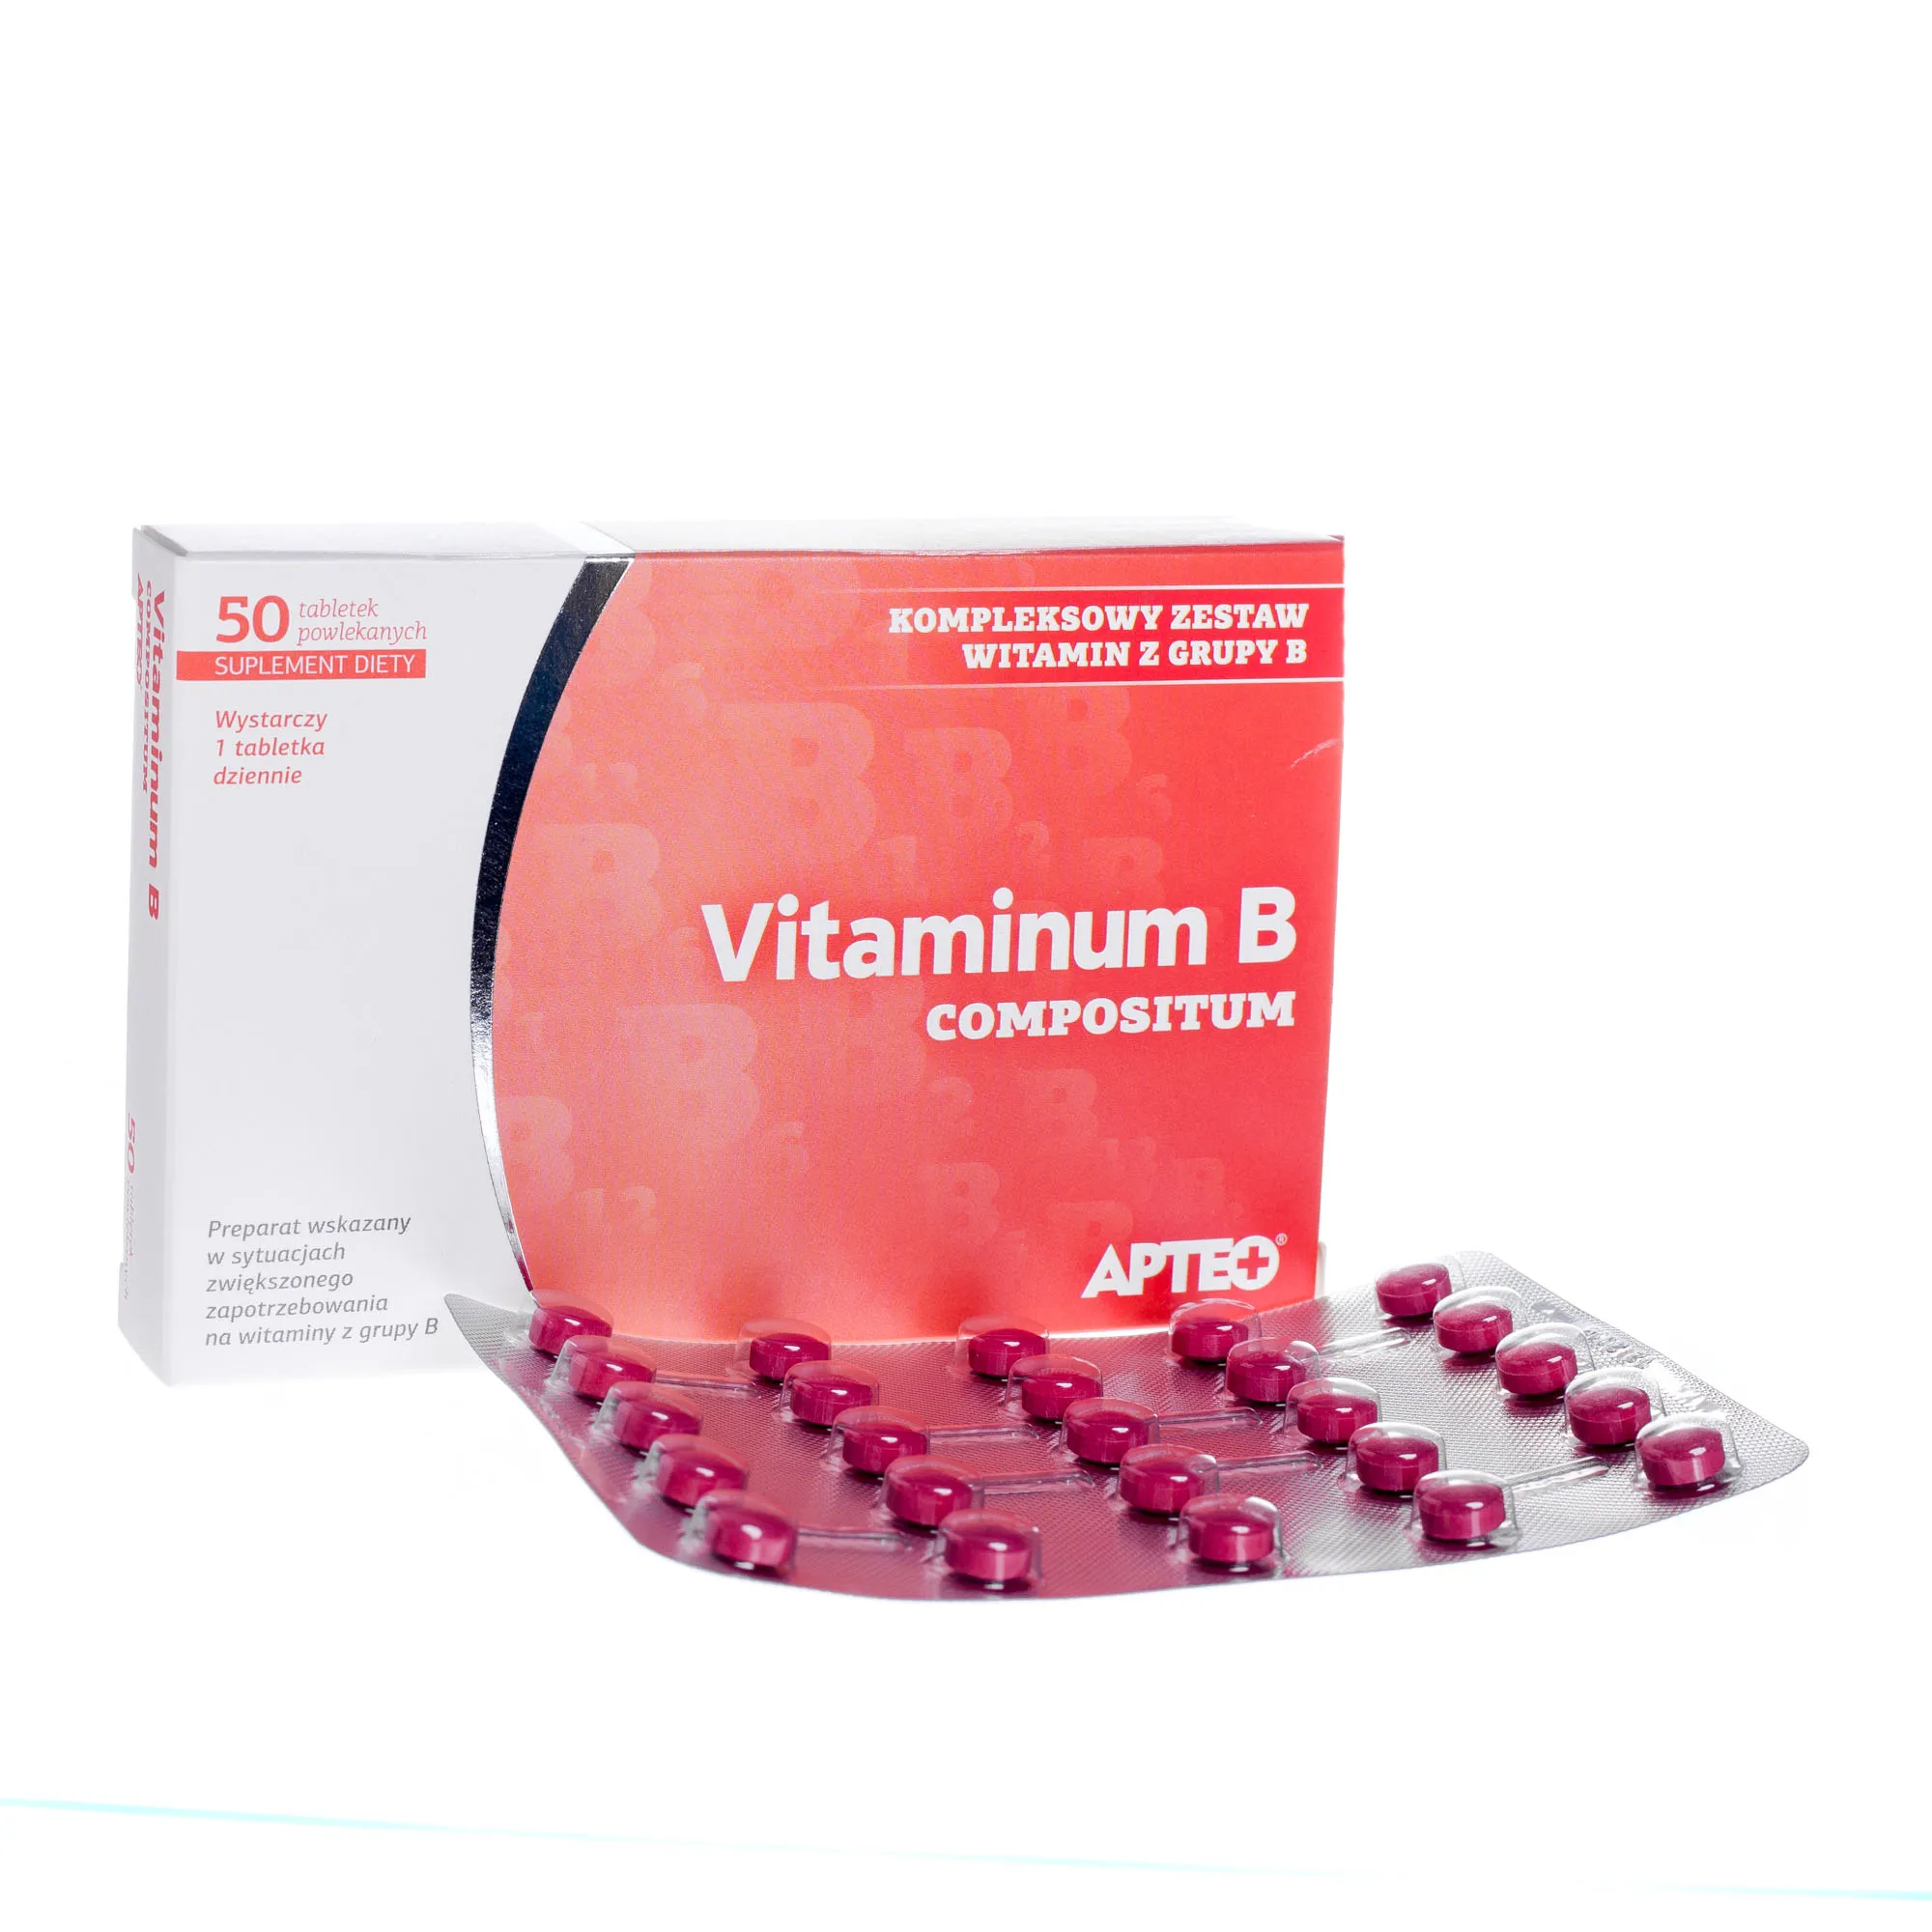 Vitaminum B Compositum, suplement diety, 50 tabletek powlekanych 